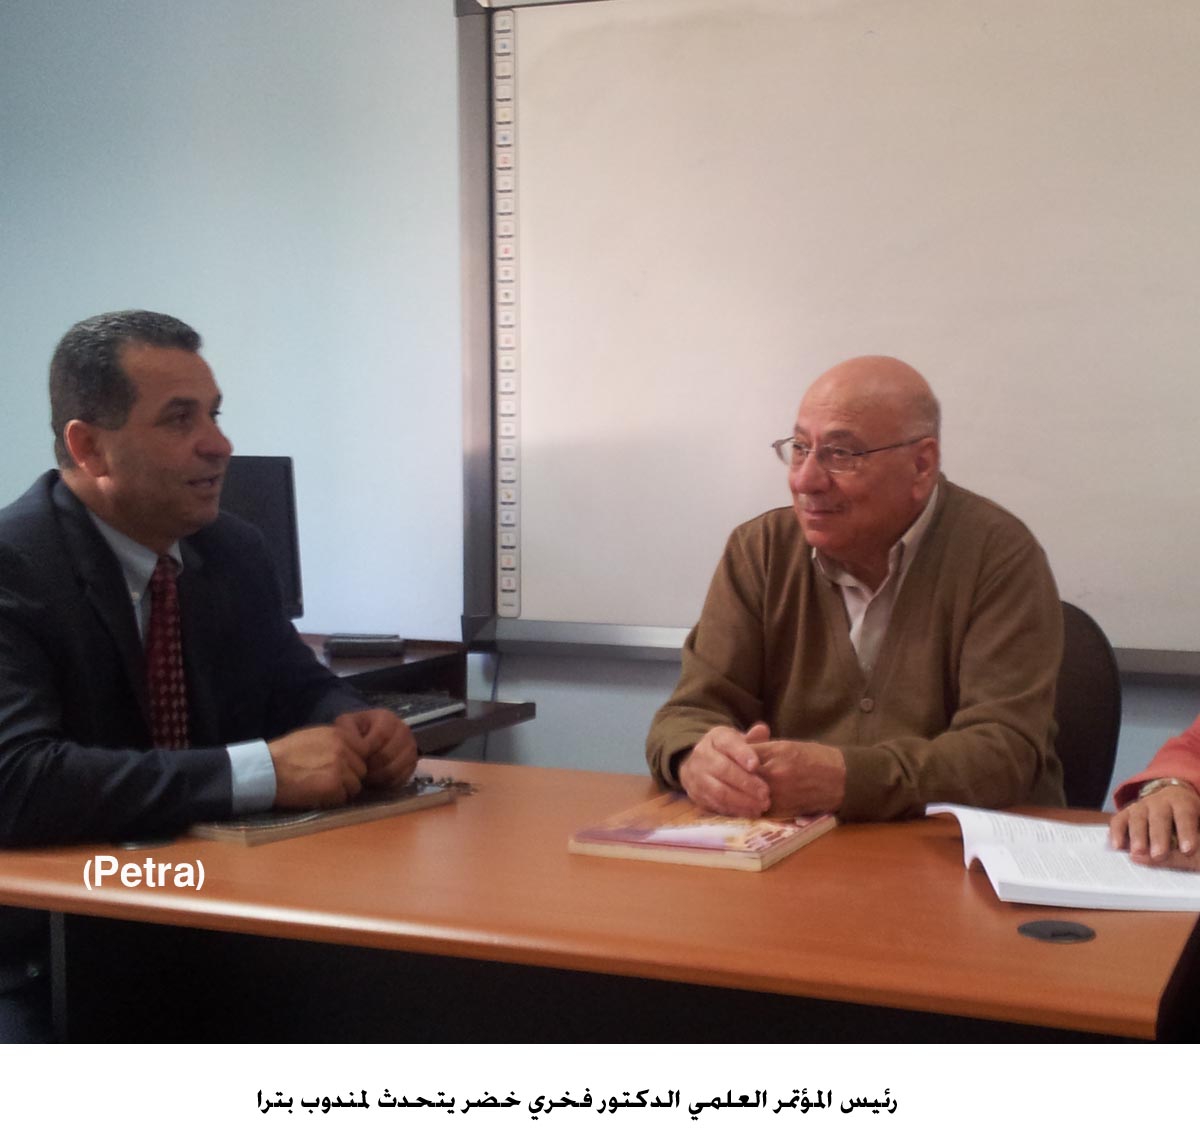 conference on elderly in jordan